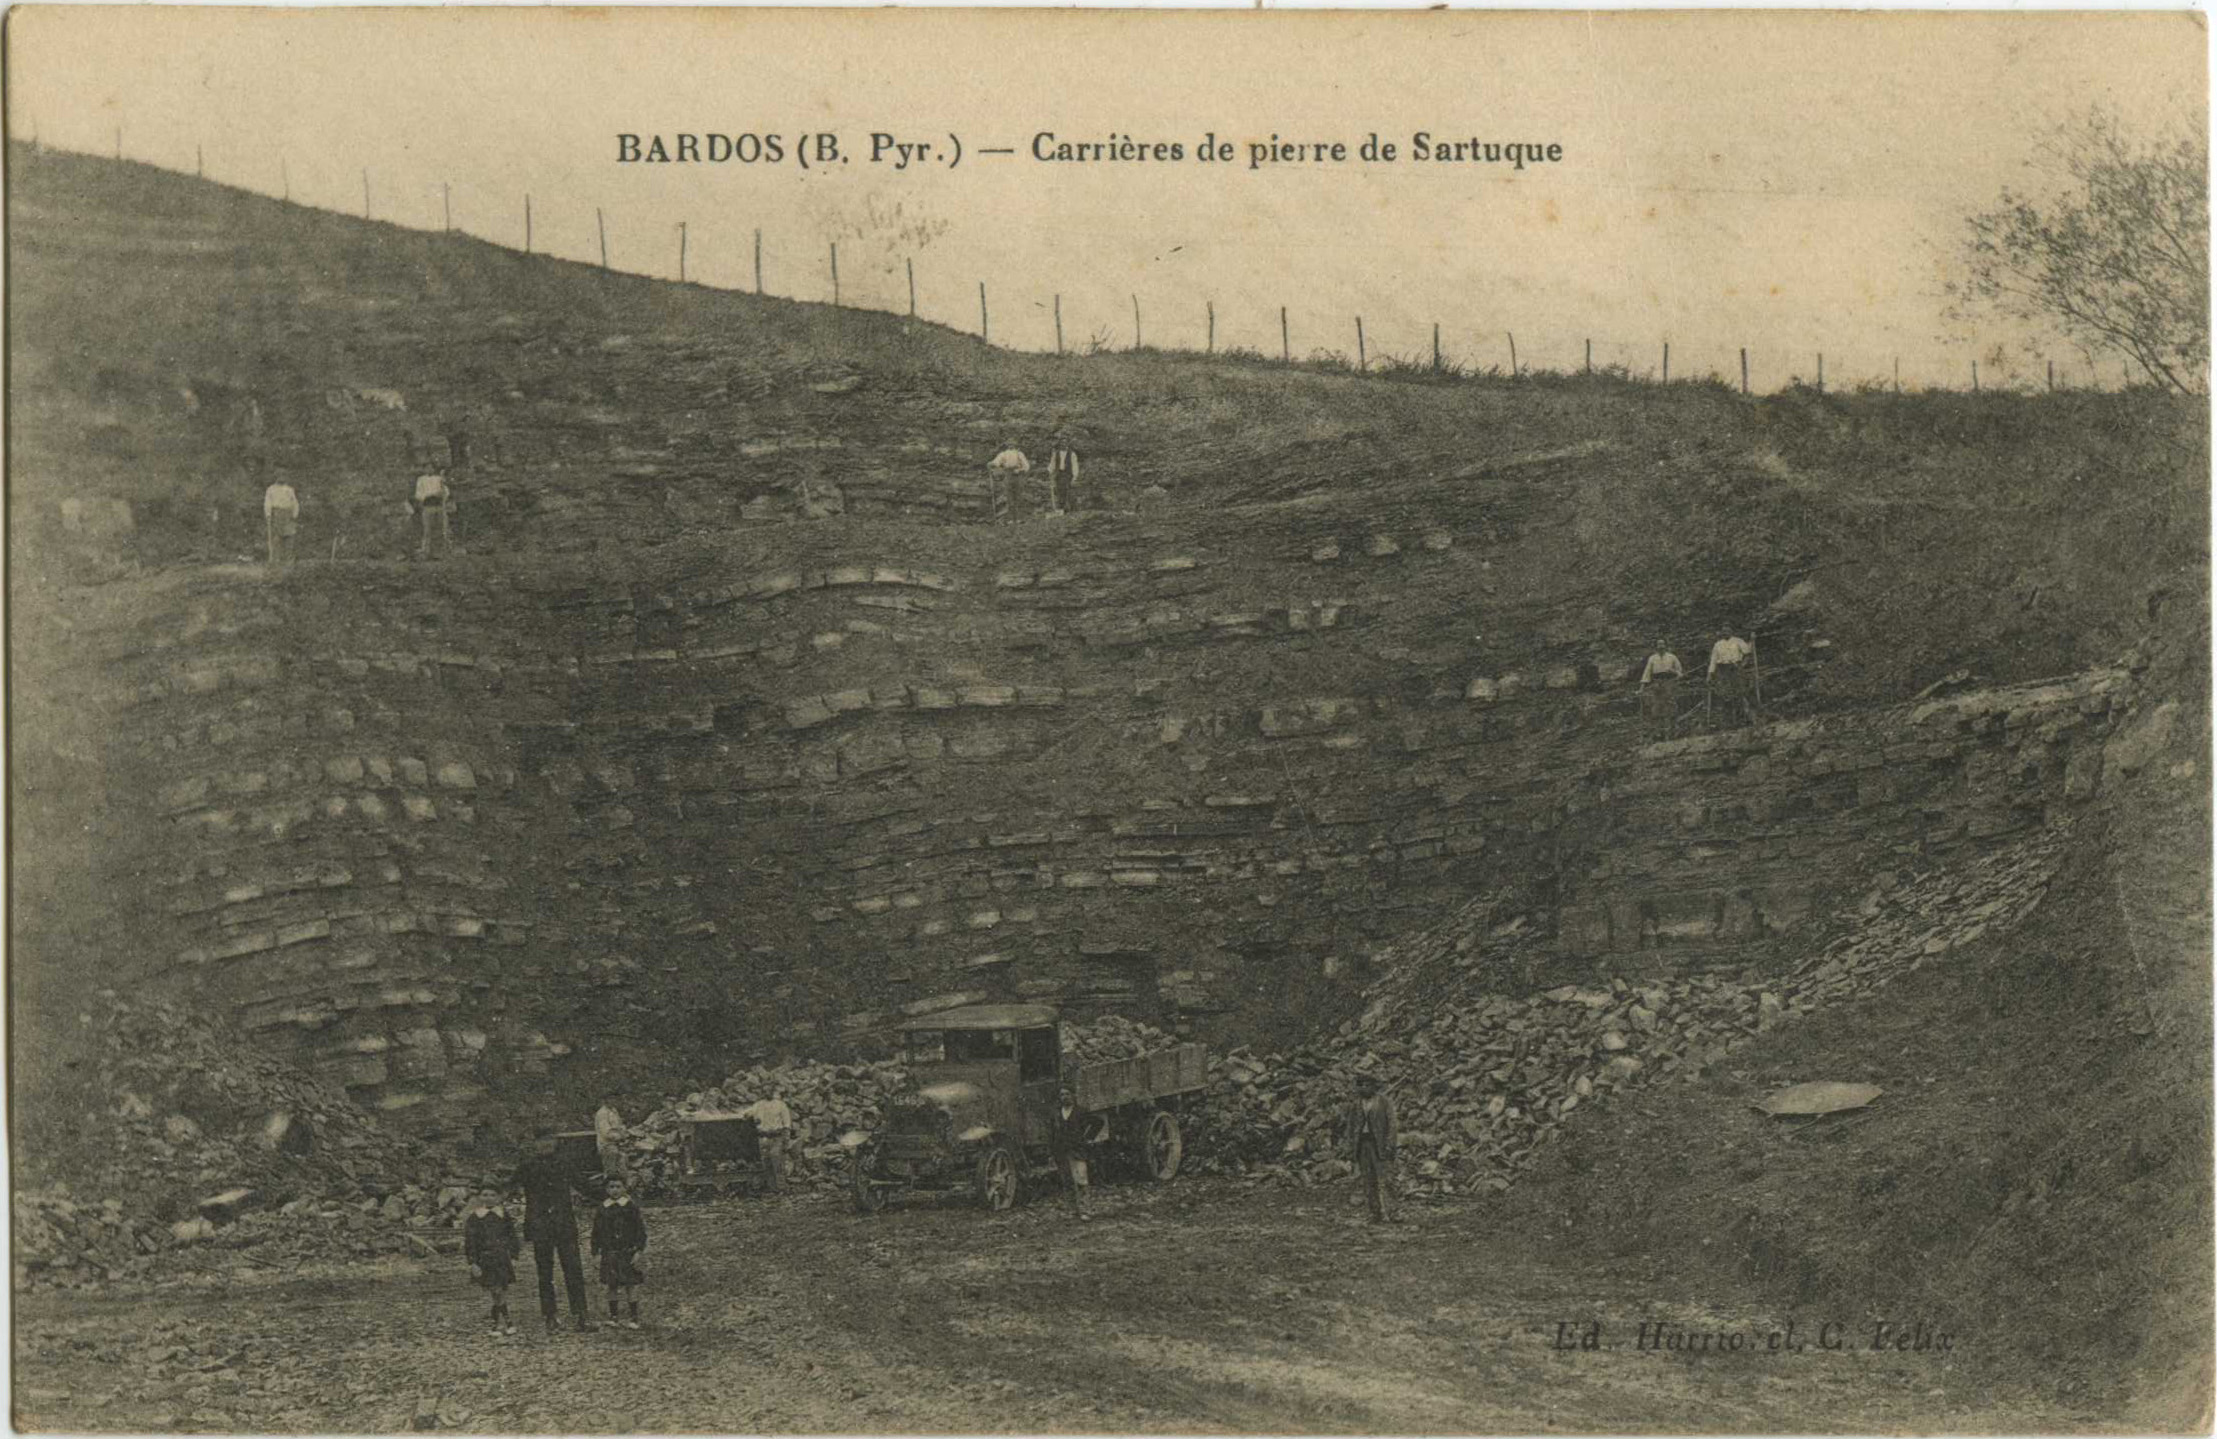 Bardos - Carrières de pierre de Sartuque